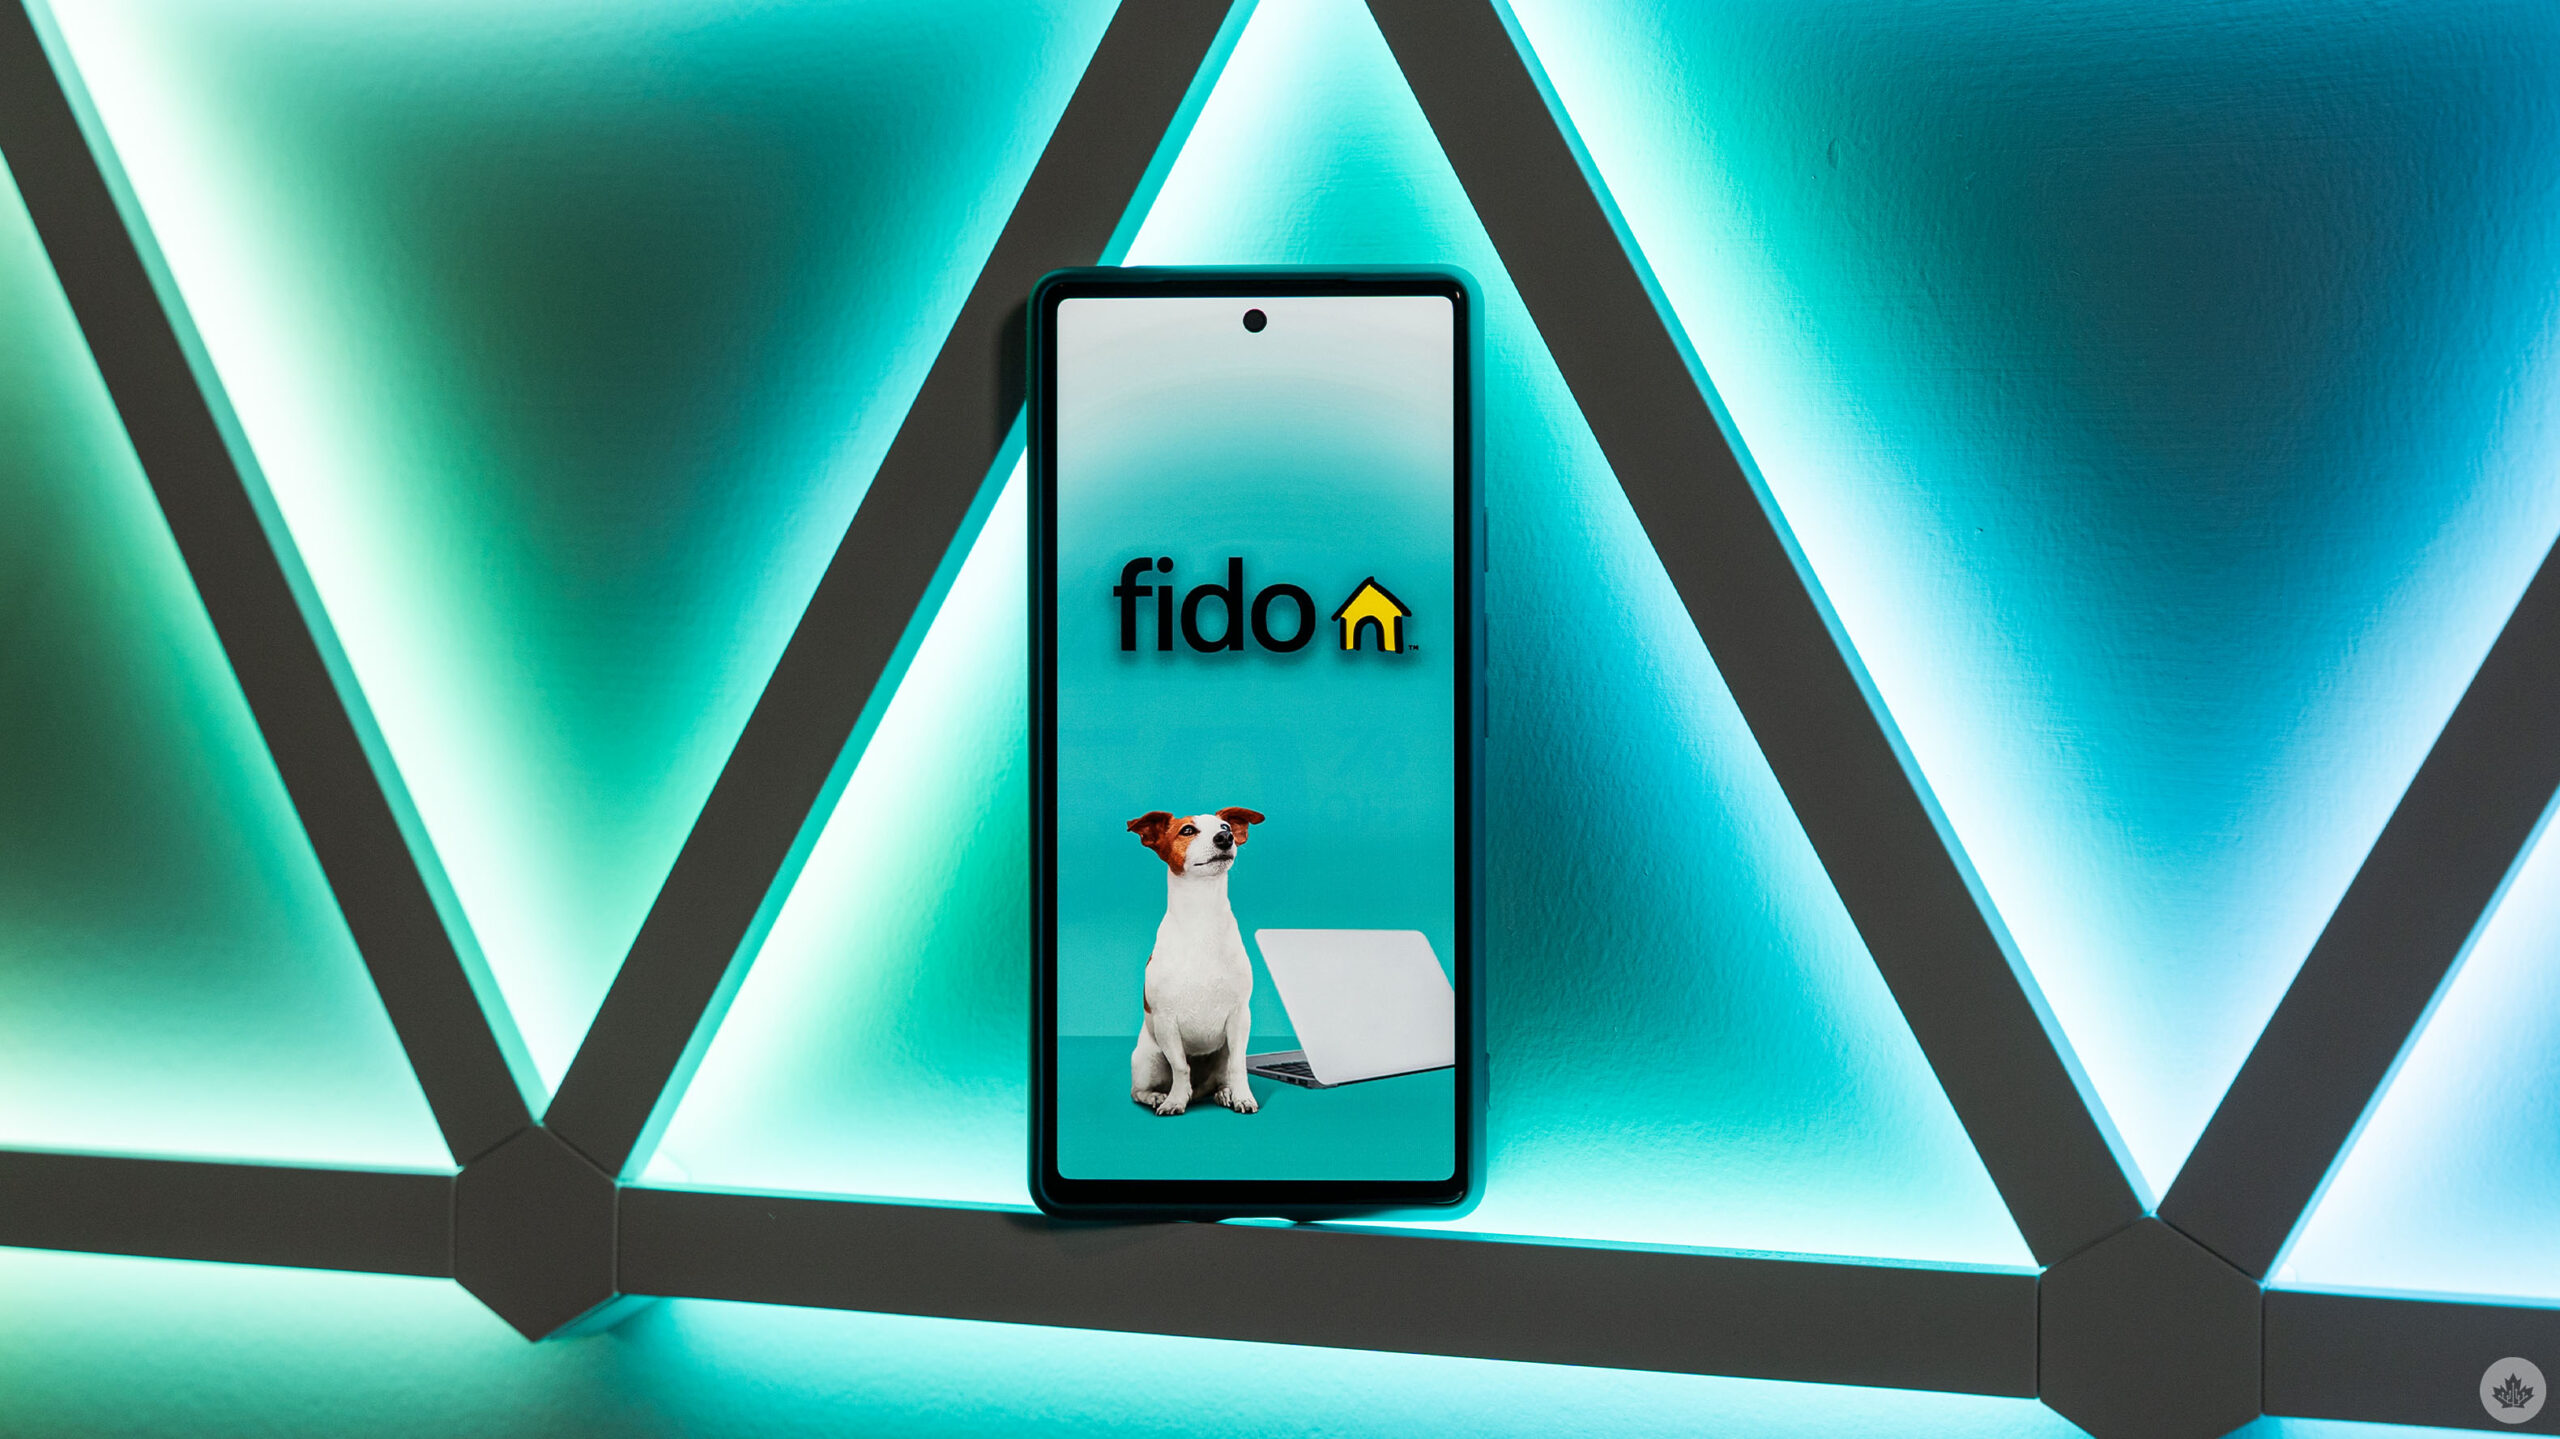 Fido logo on smartphone